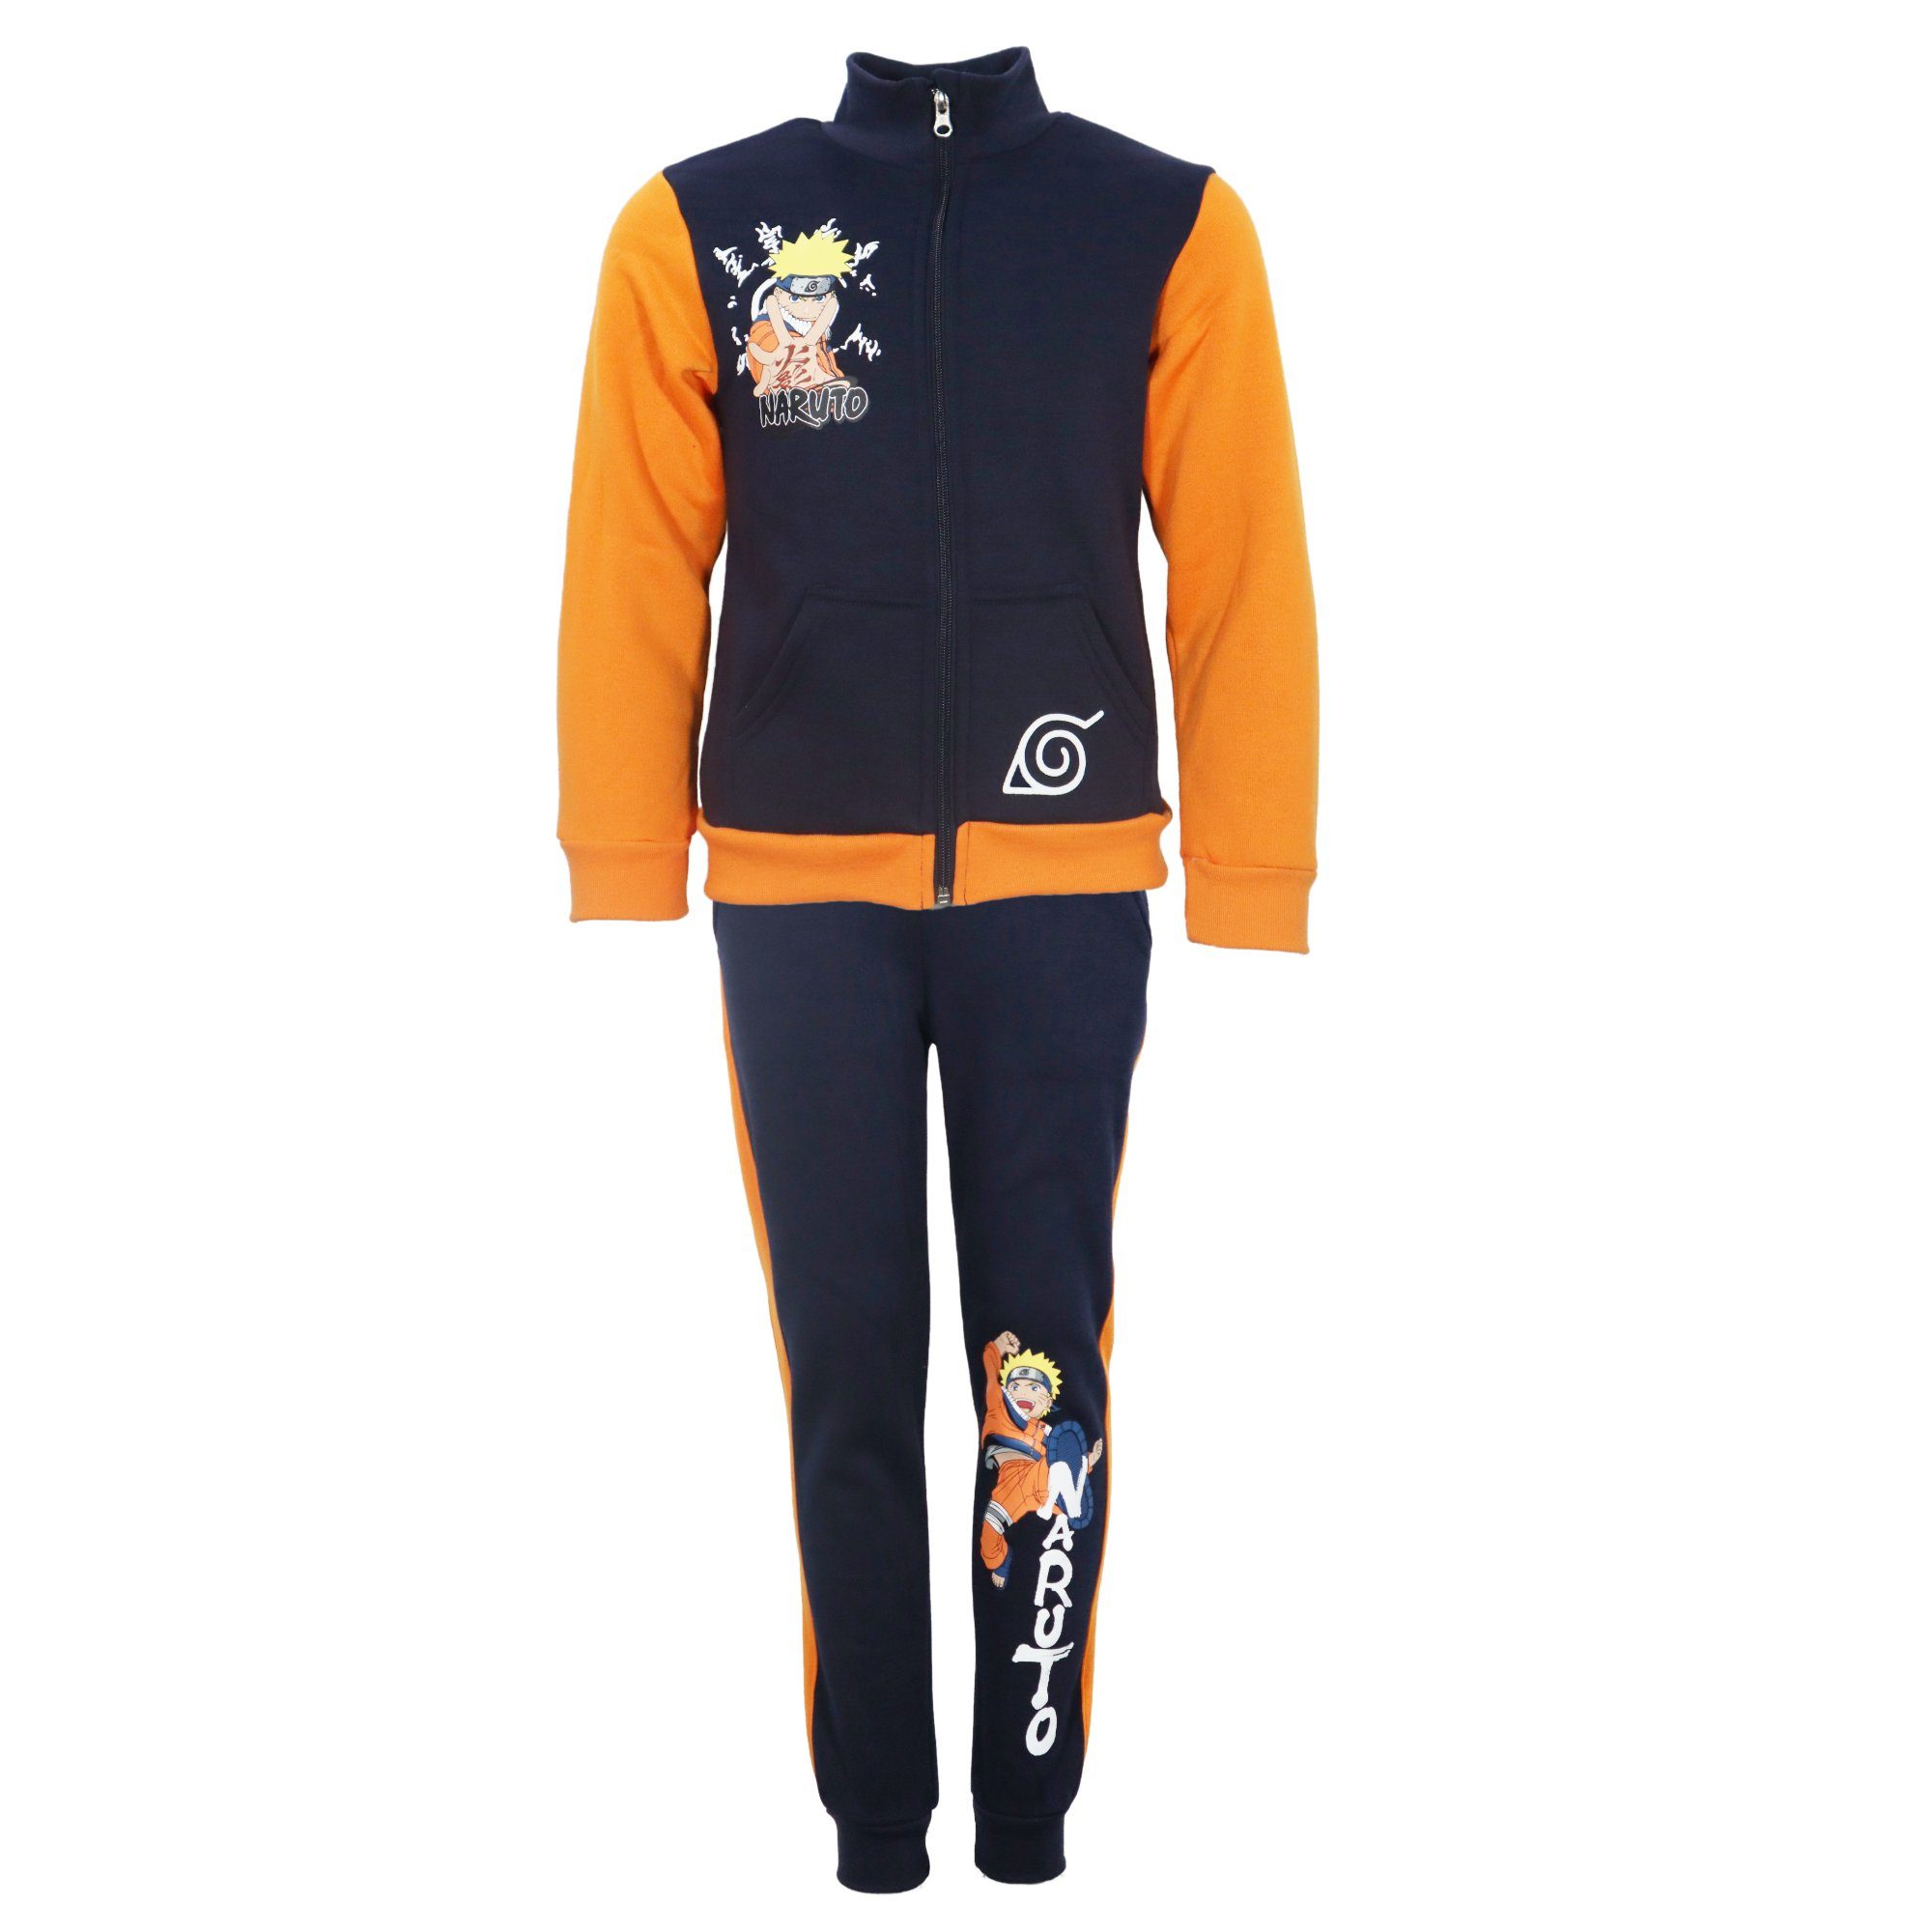 Naruto Jogginganzug Naruto Shippuden Joggingset Blau Sweater bis 98 140 Gr. Jacke, Hose Sporthose